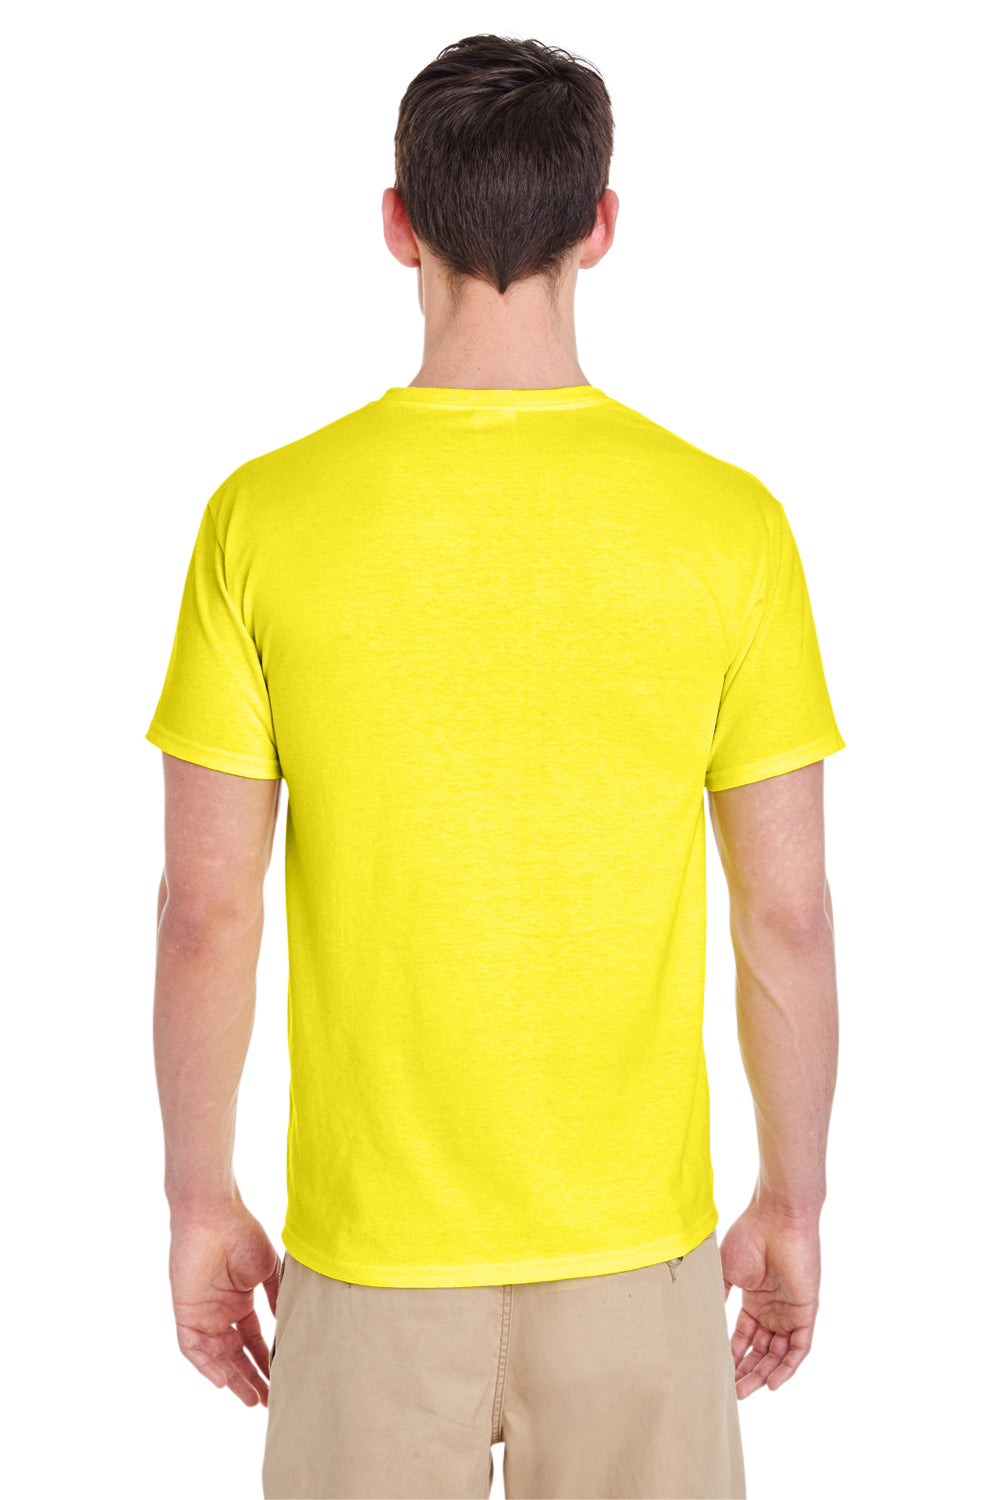 Jerzees 29M Mens Dri-Power Moisture Wicking Short Sleeve Crewneck T-Shirt Neon Yellow Back